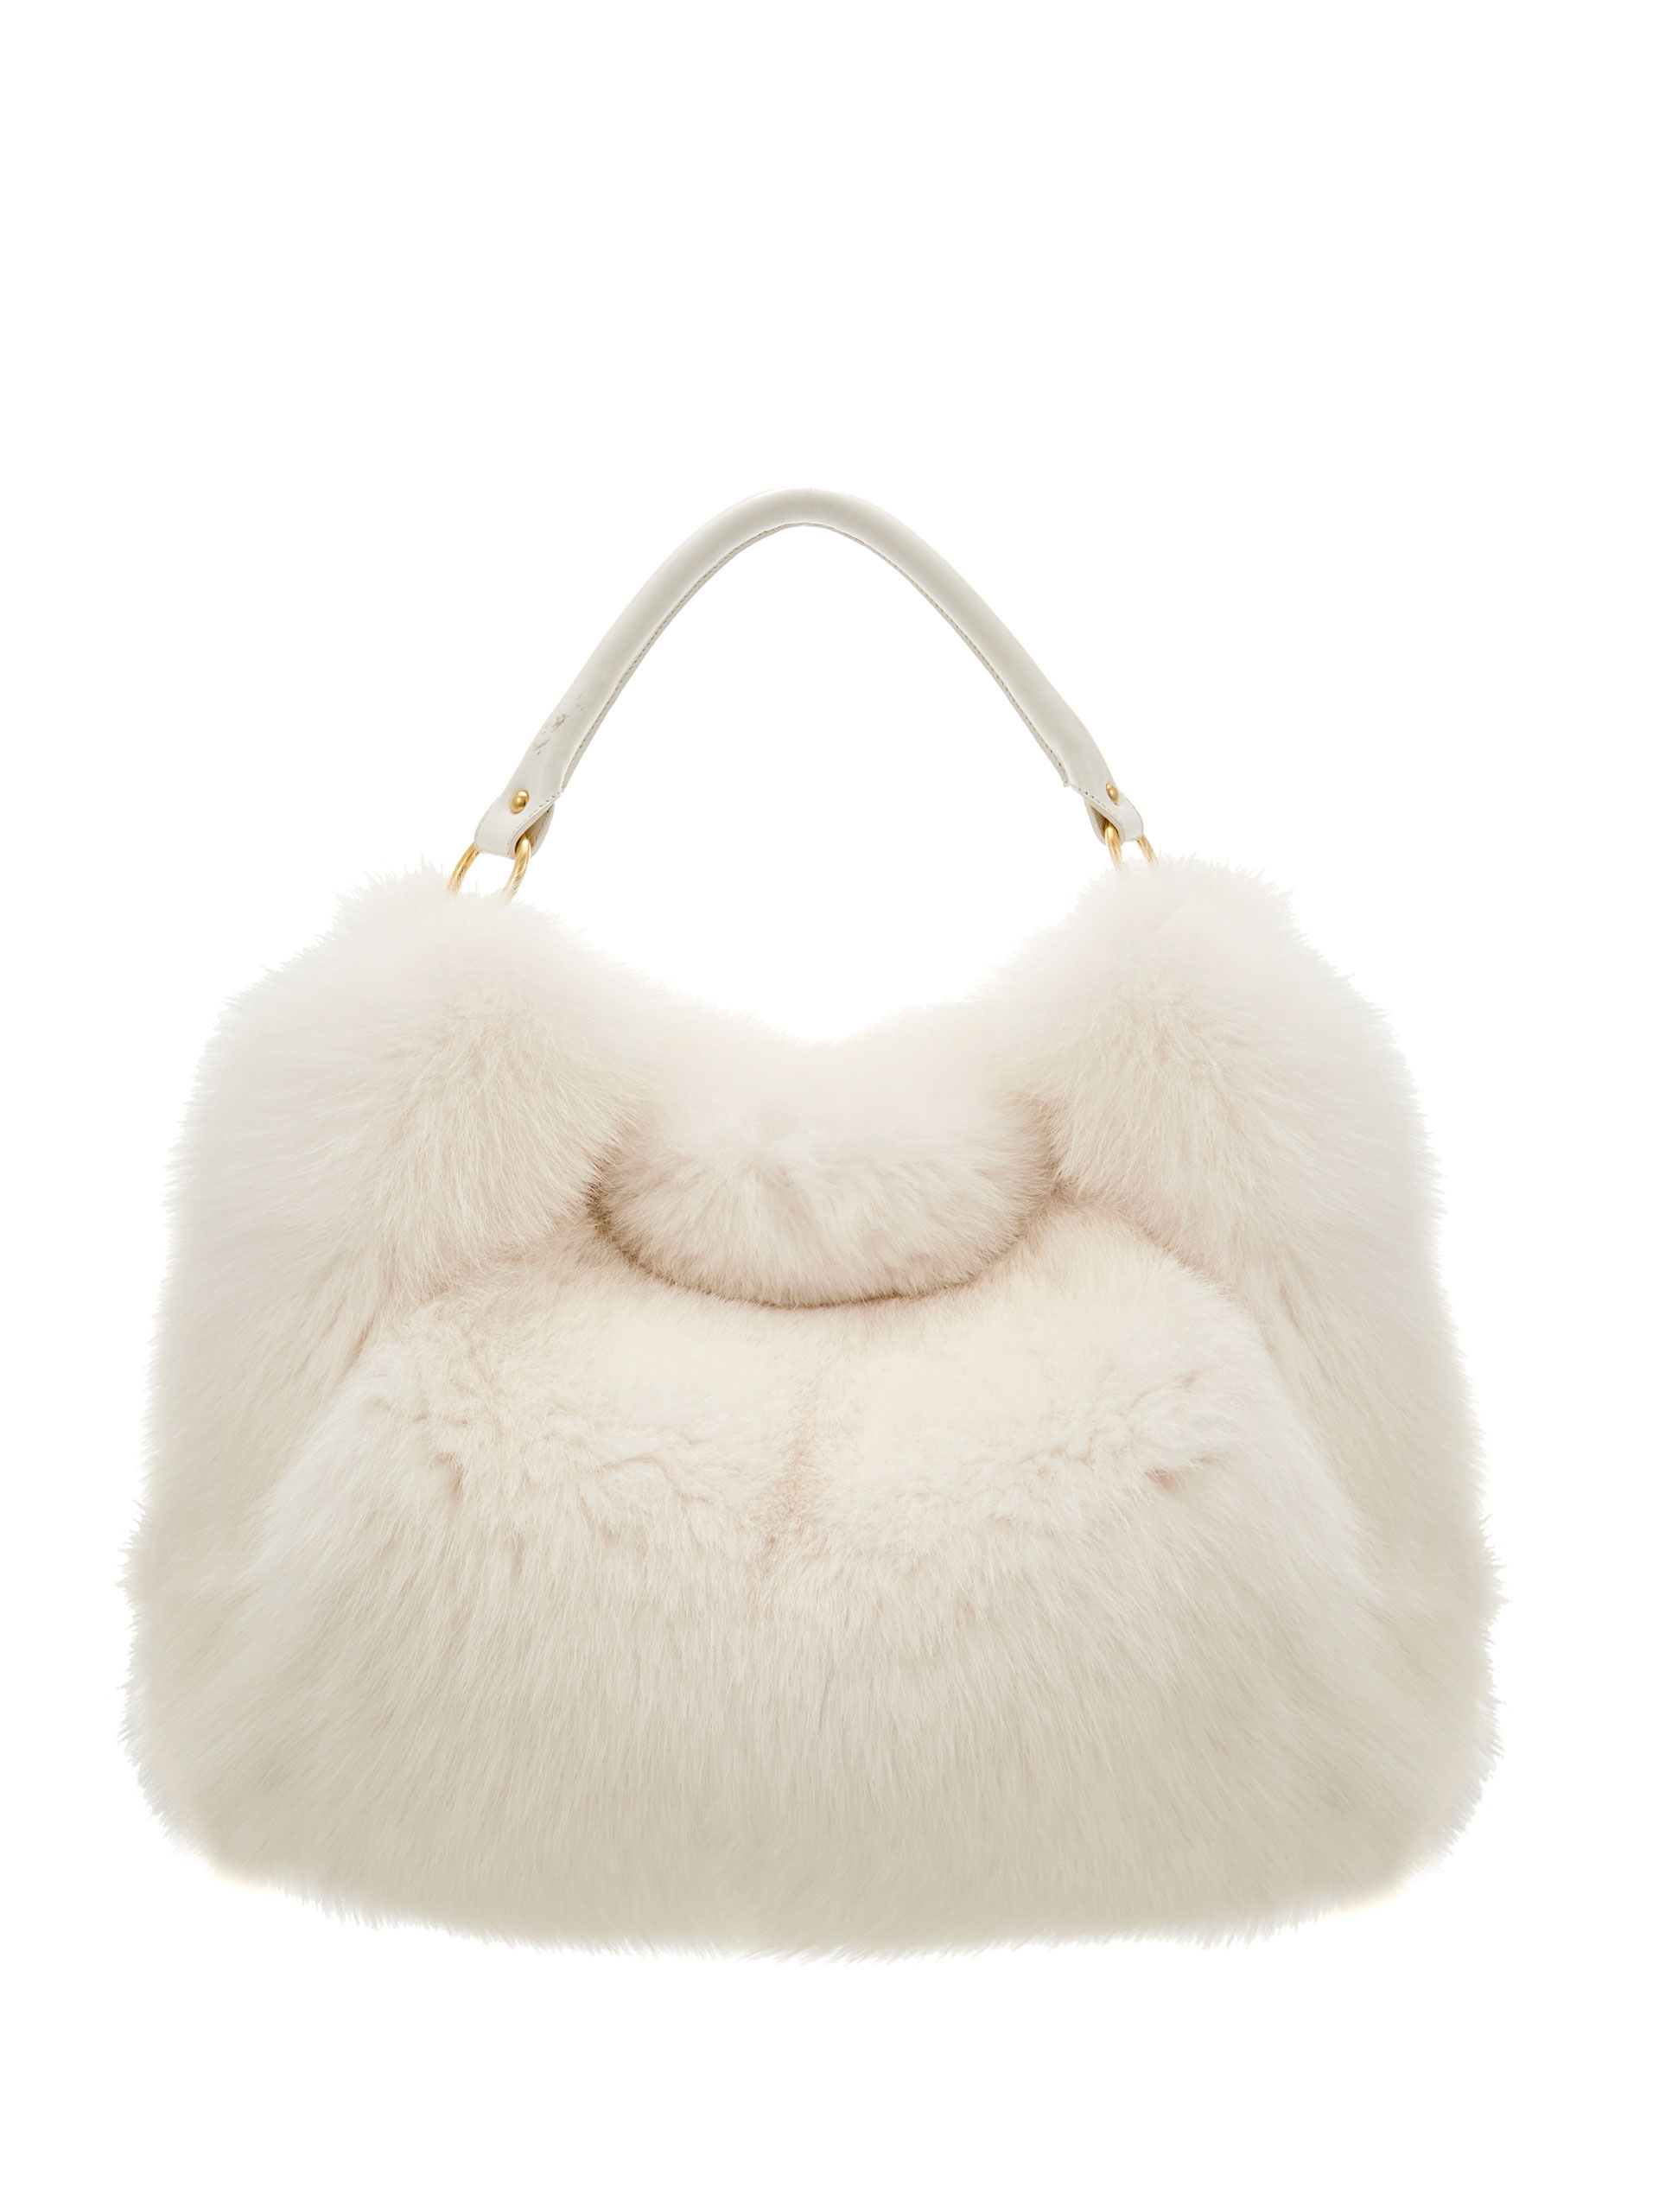 White Fox Fur Hand Bag | AVANTI FURS Collection